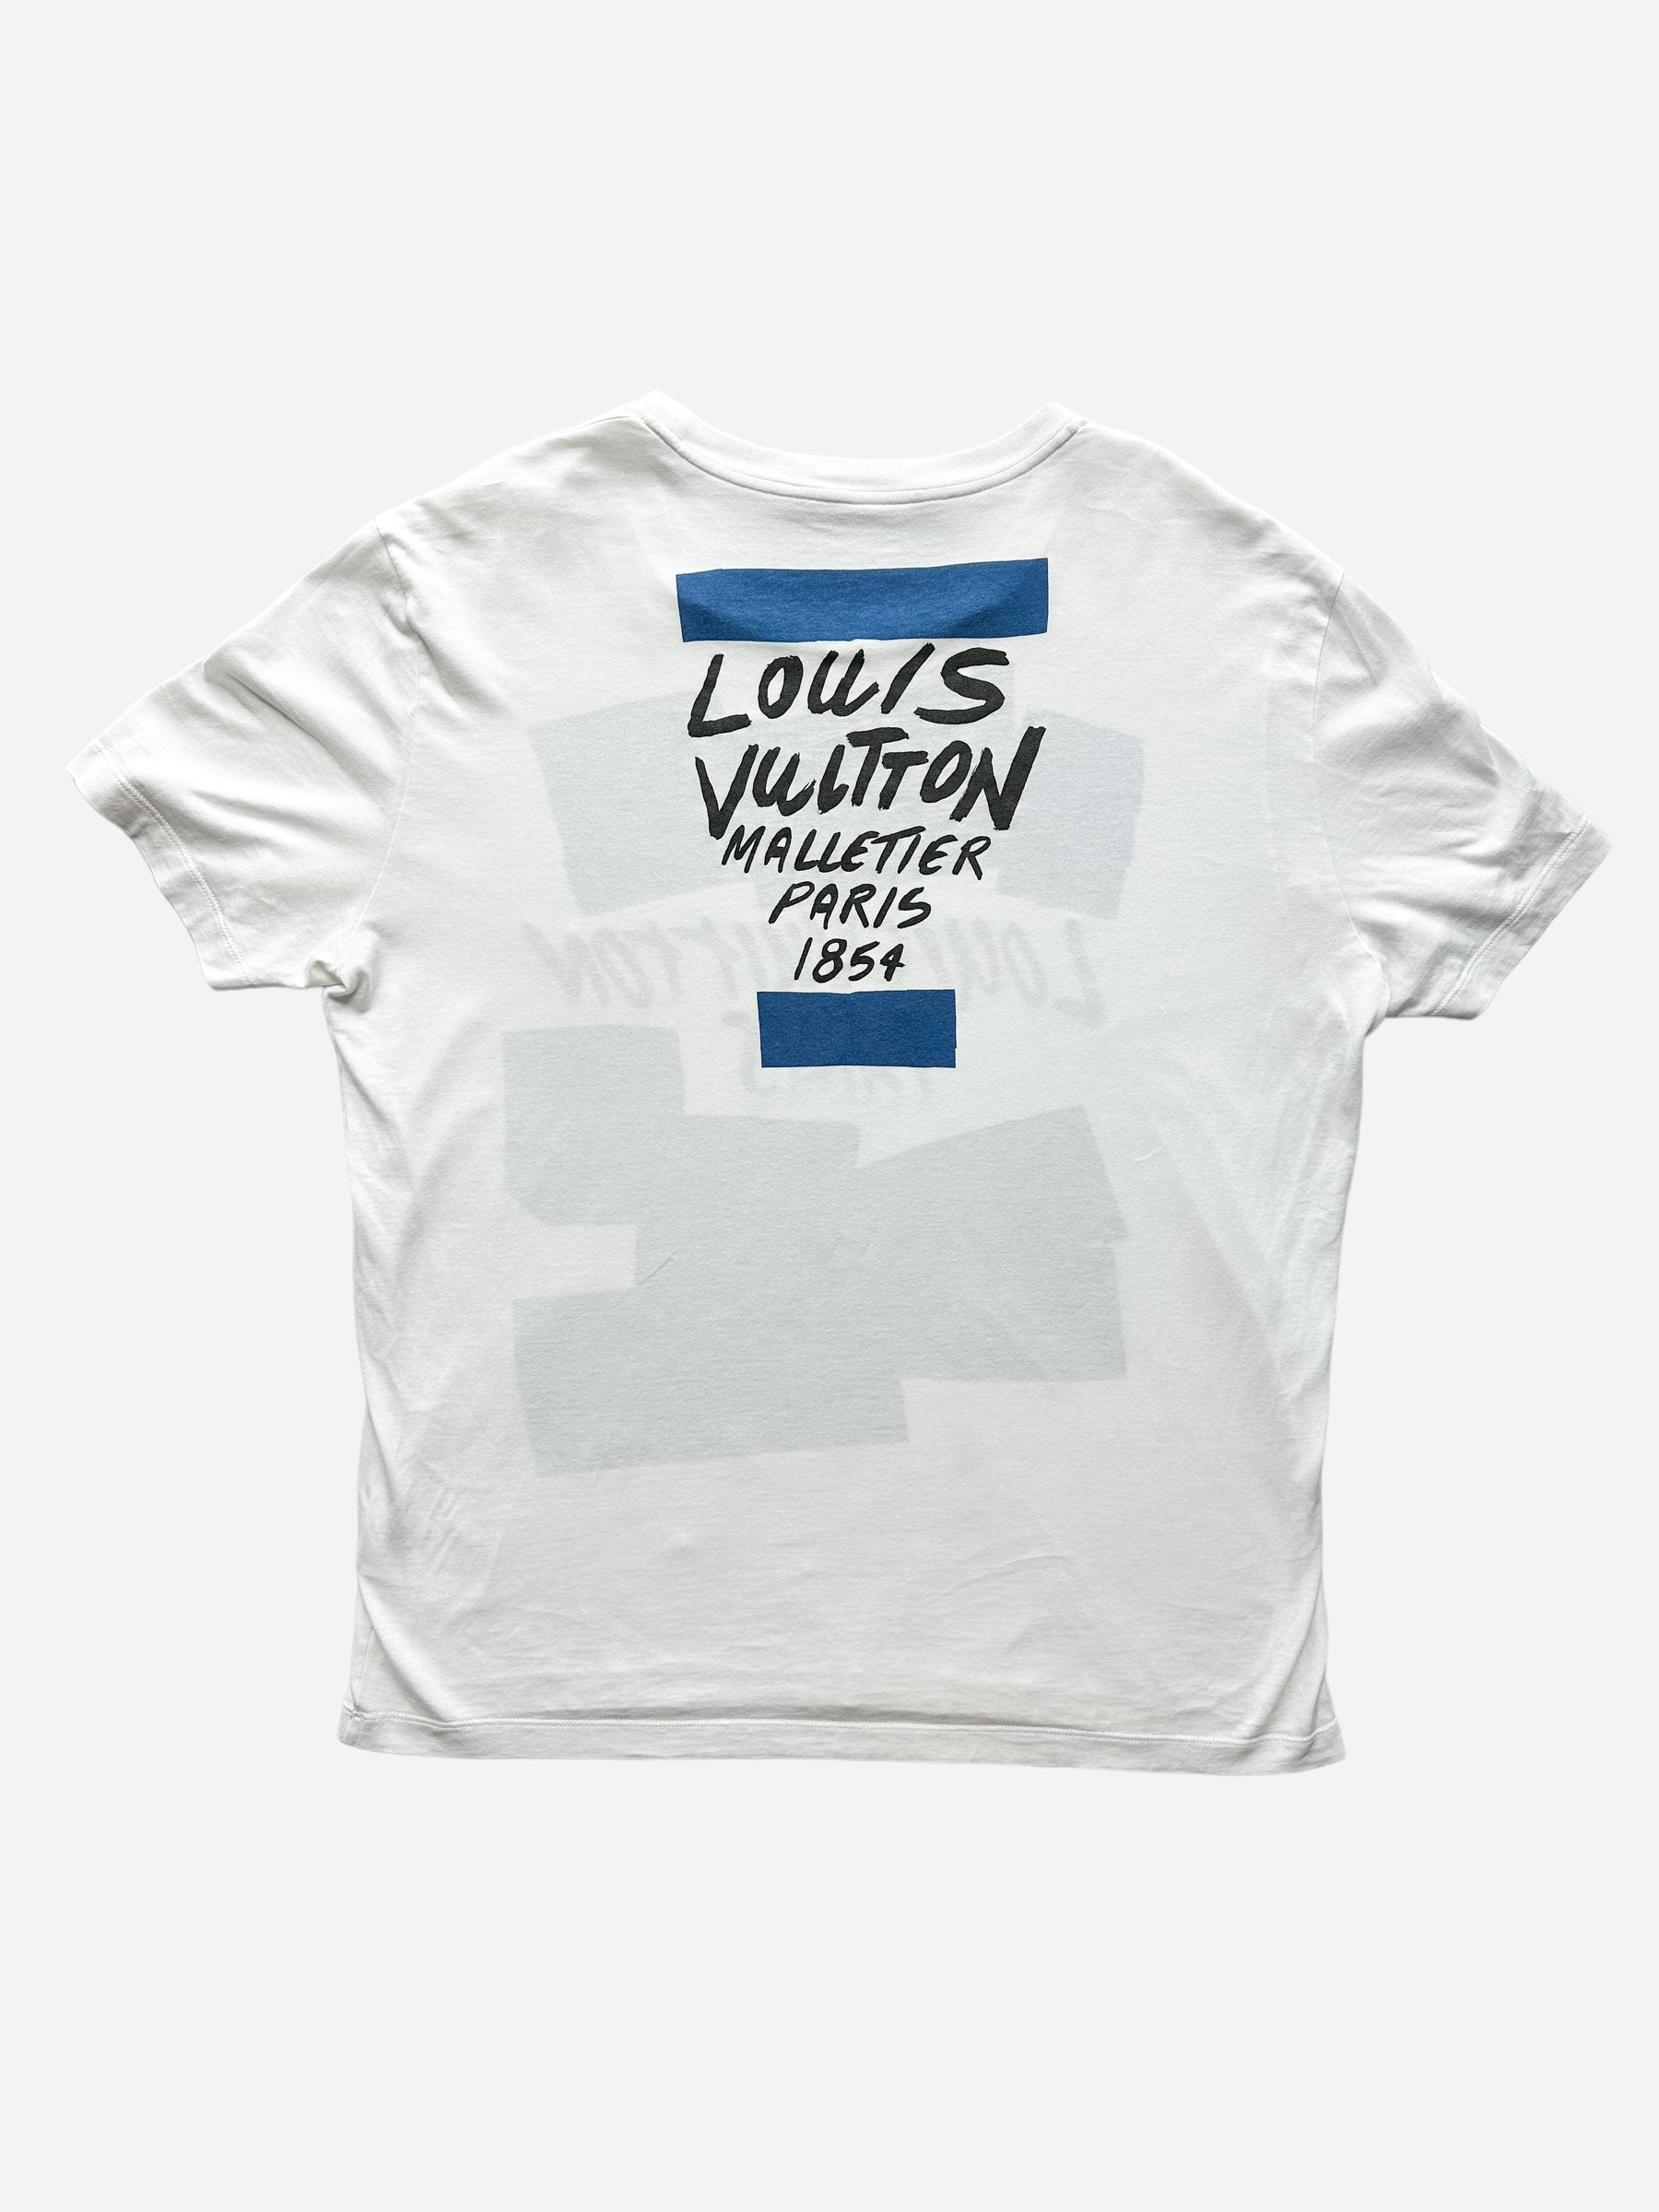 T-shirt Louis Vuitton Black size XS International in Cotton - 31253642